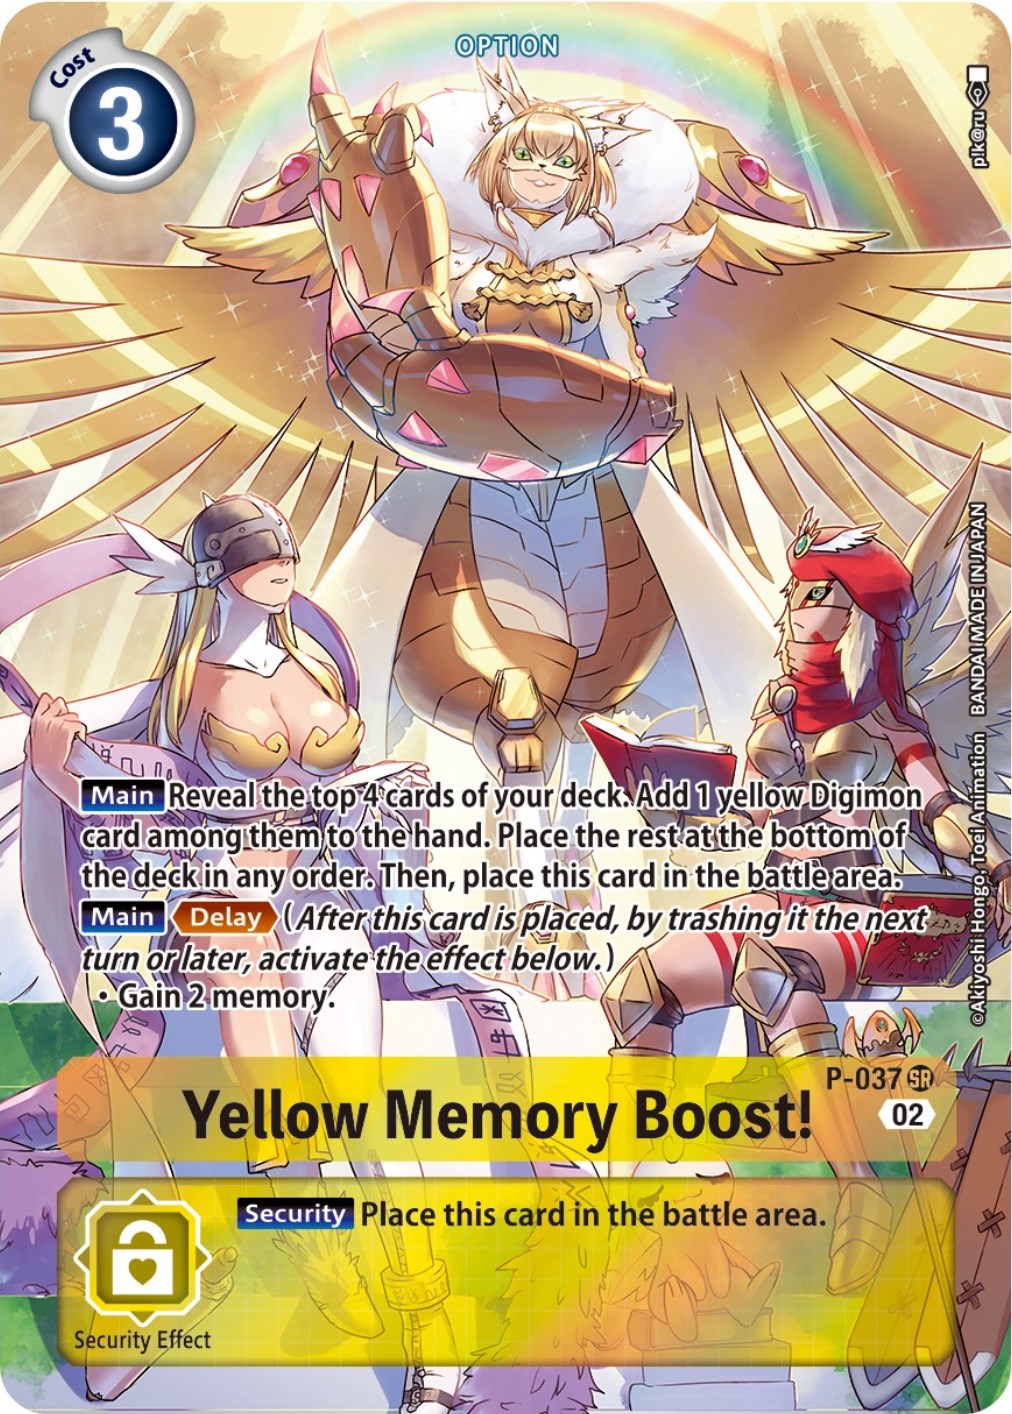 Yellow Memory Boost! - P-037 (Digimon Adventure Box 2) [P-037] [Digimon Promotion Cards] Foil